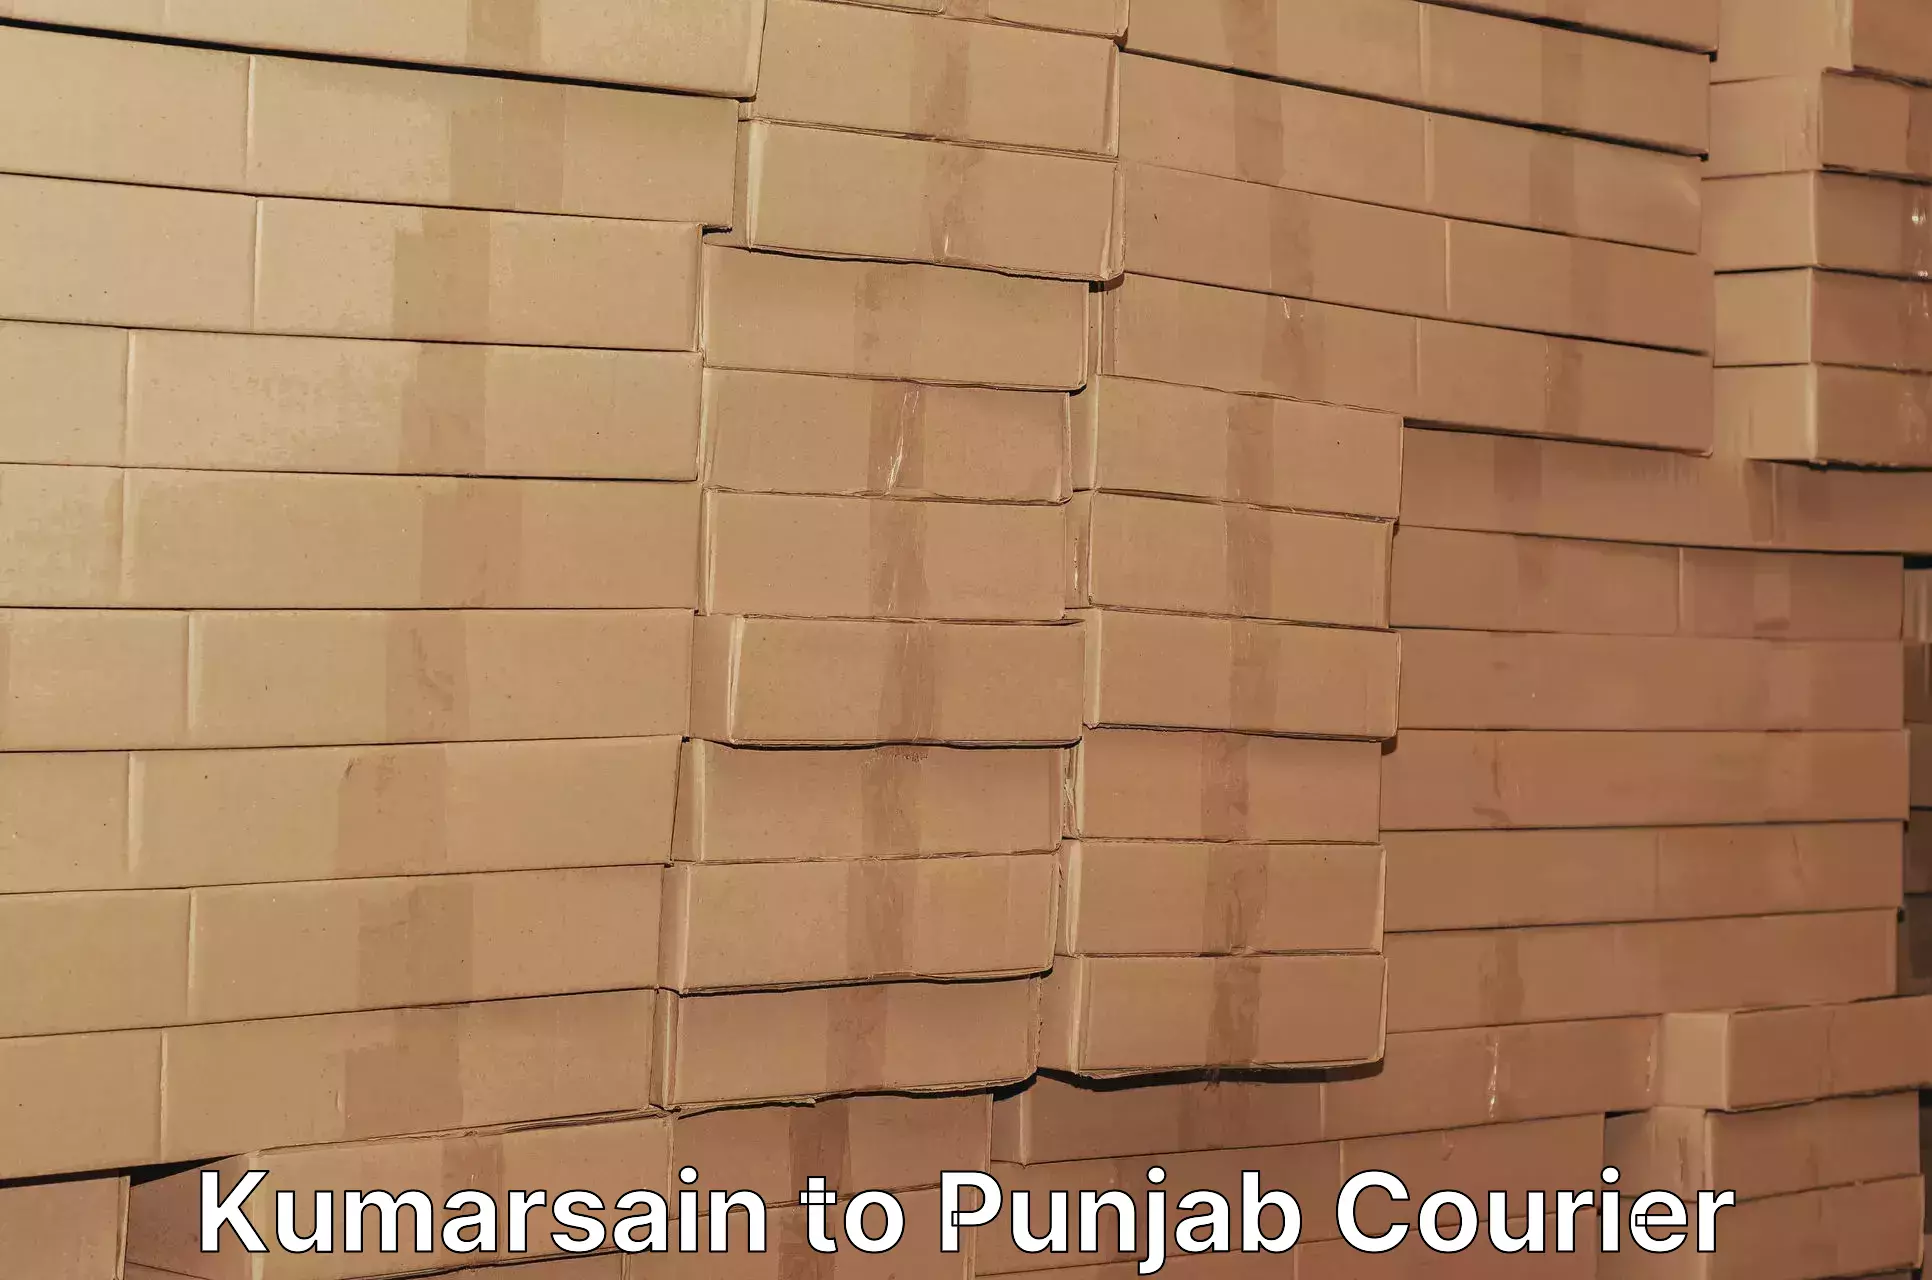 State-of-the-art courier technology Kumarsain to Punjab